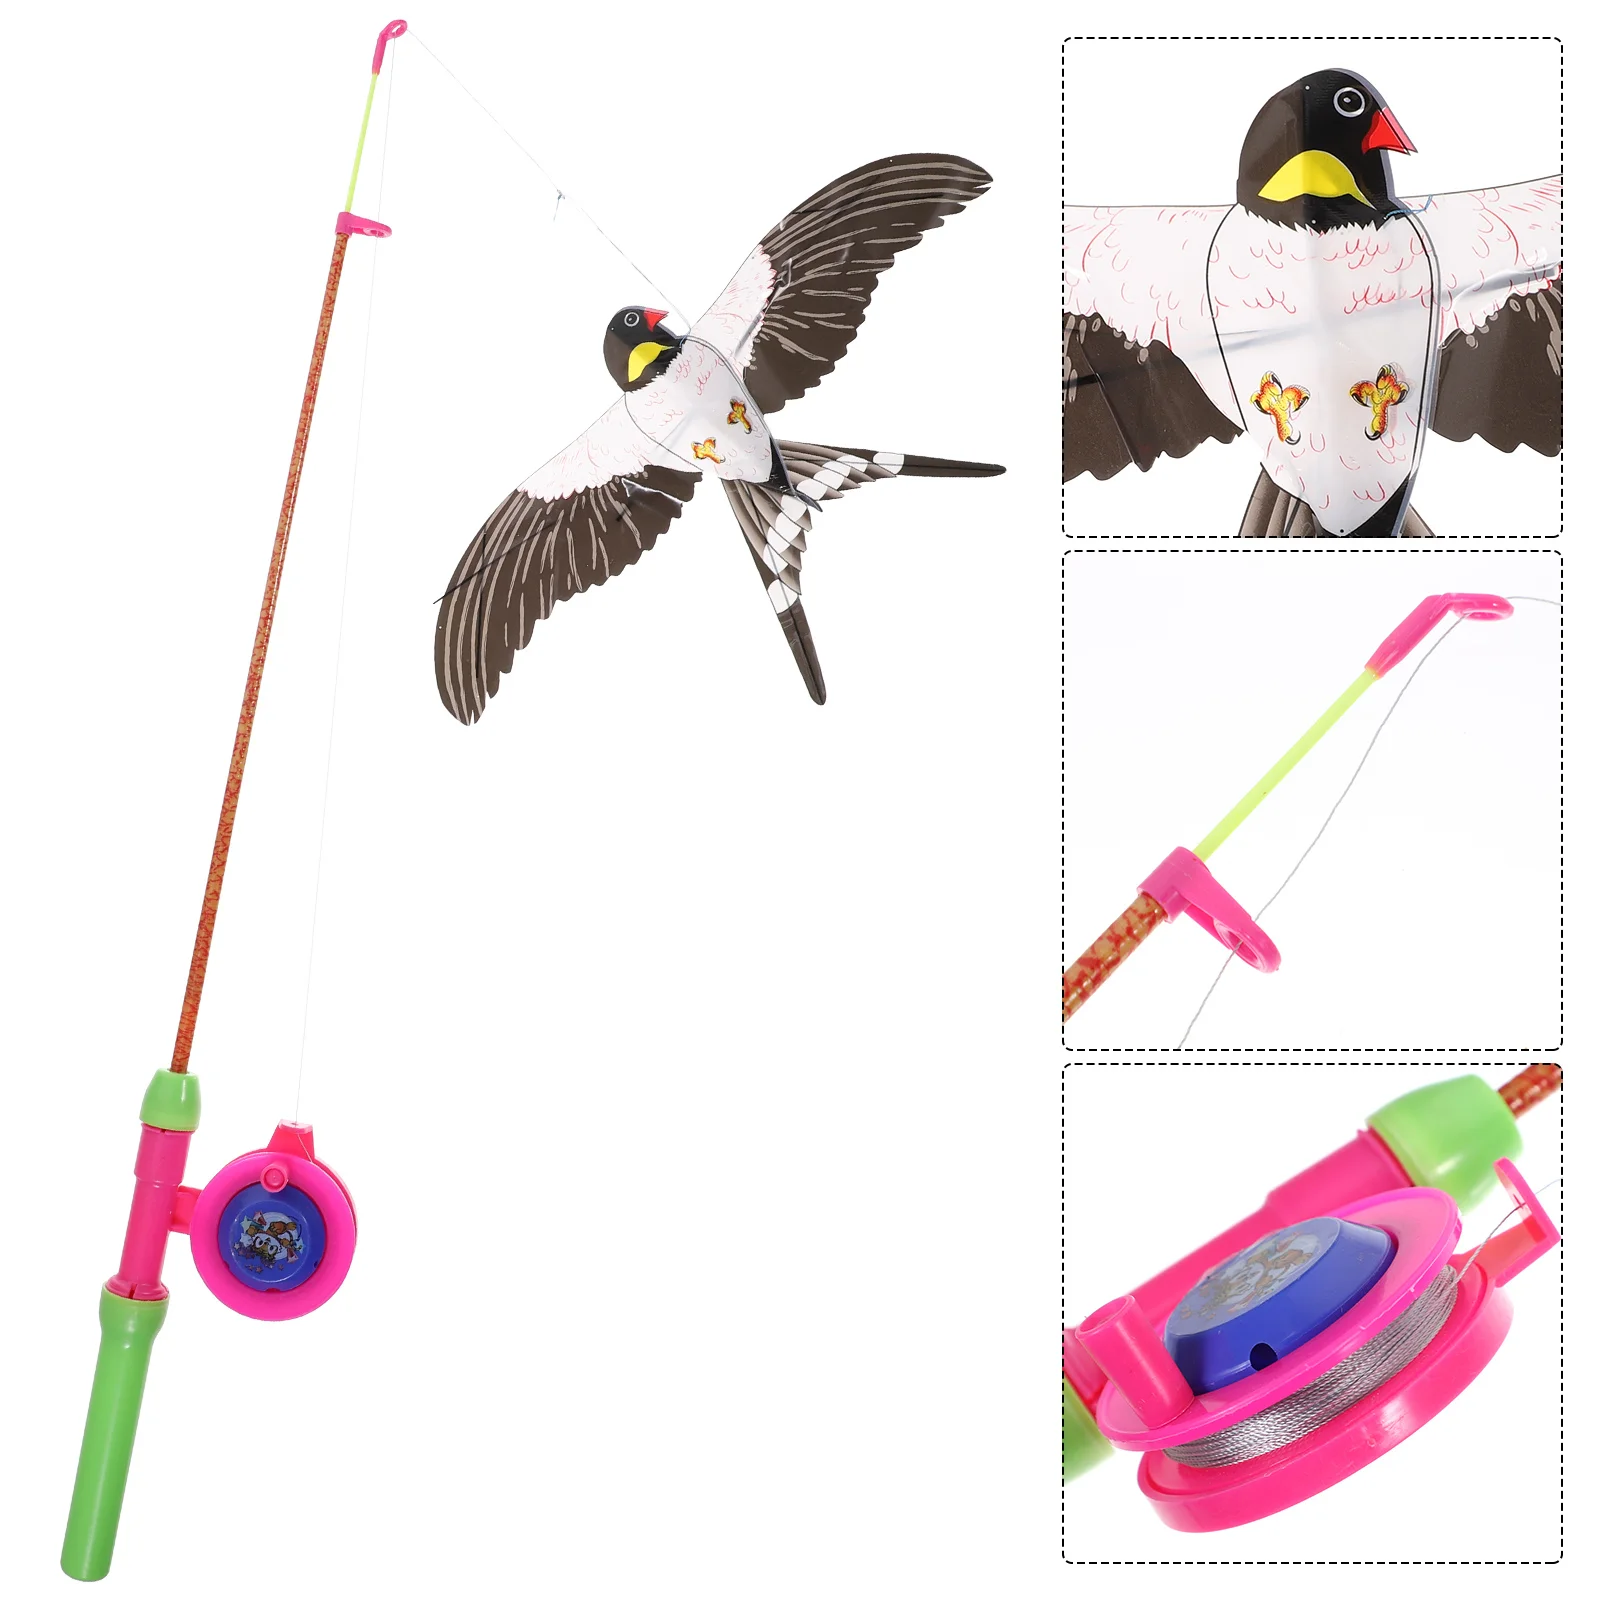 

Kite Kites Kids Eagleflying Outdoor Bird Flyer S Funny Animal Easy Games Beach Beginner Fun Fly Kid Adults Lifelike